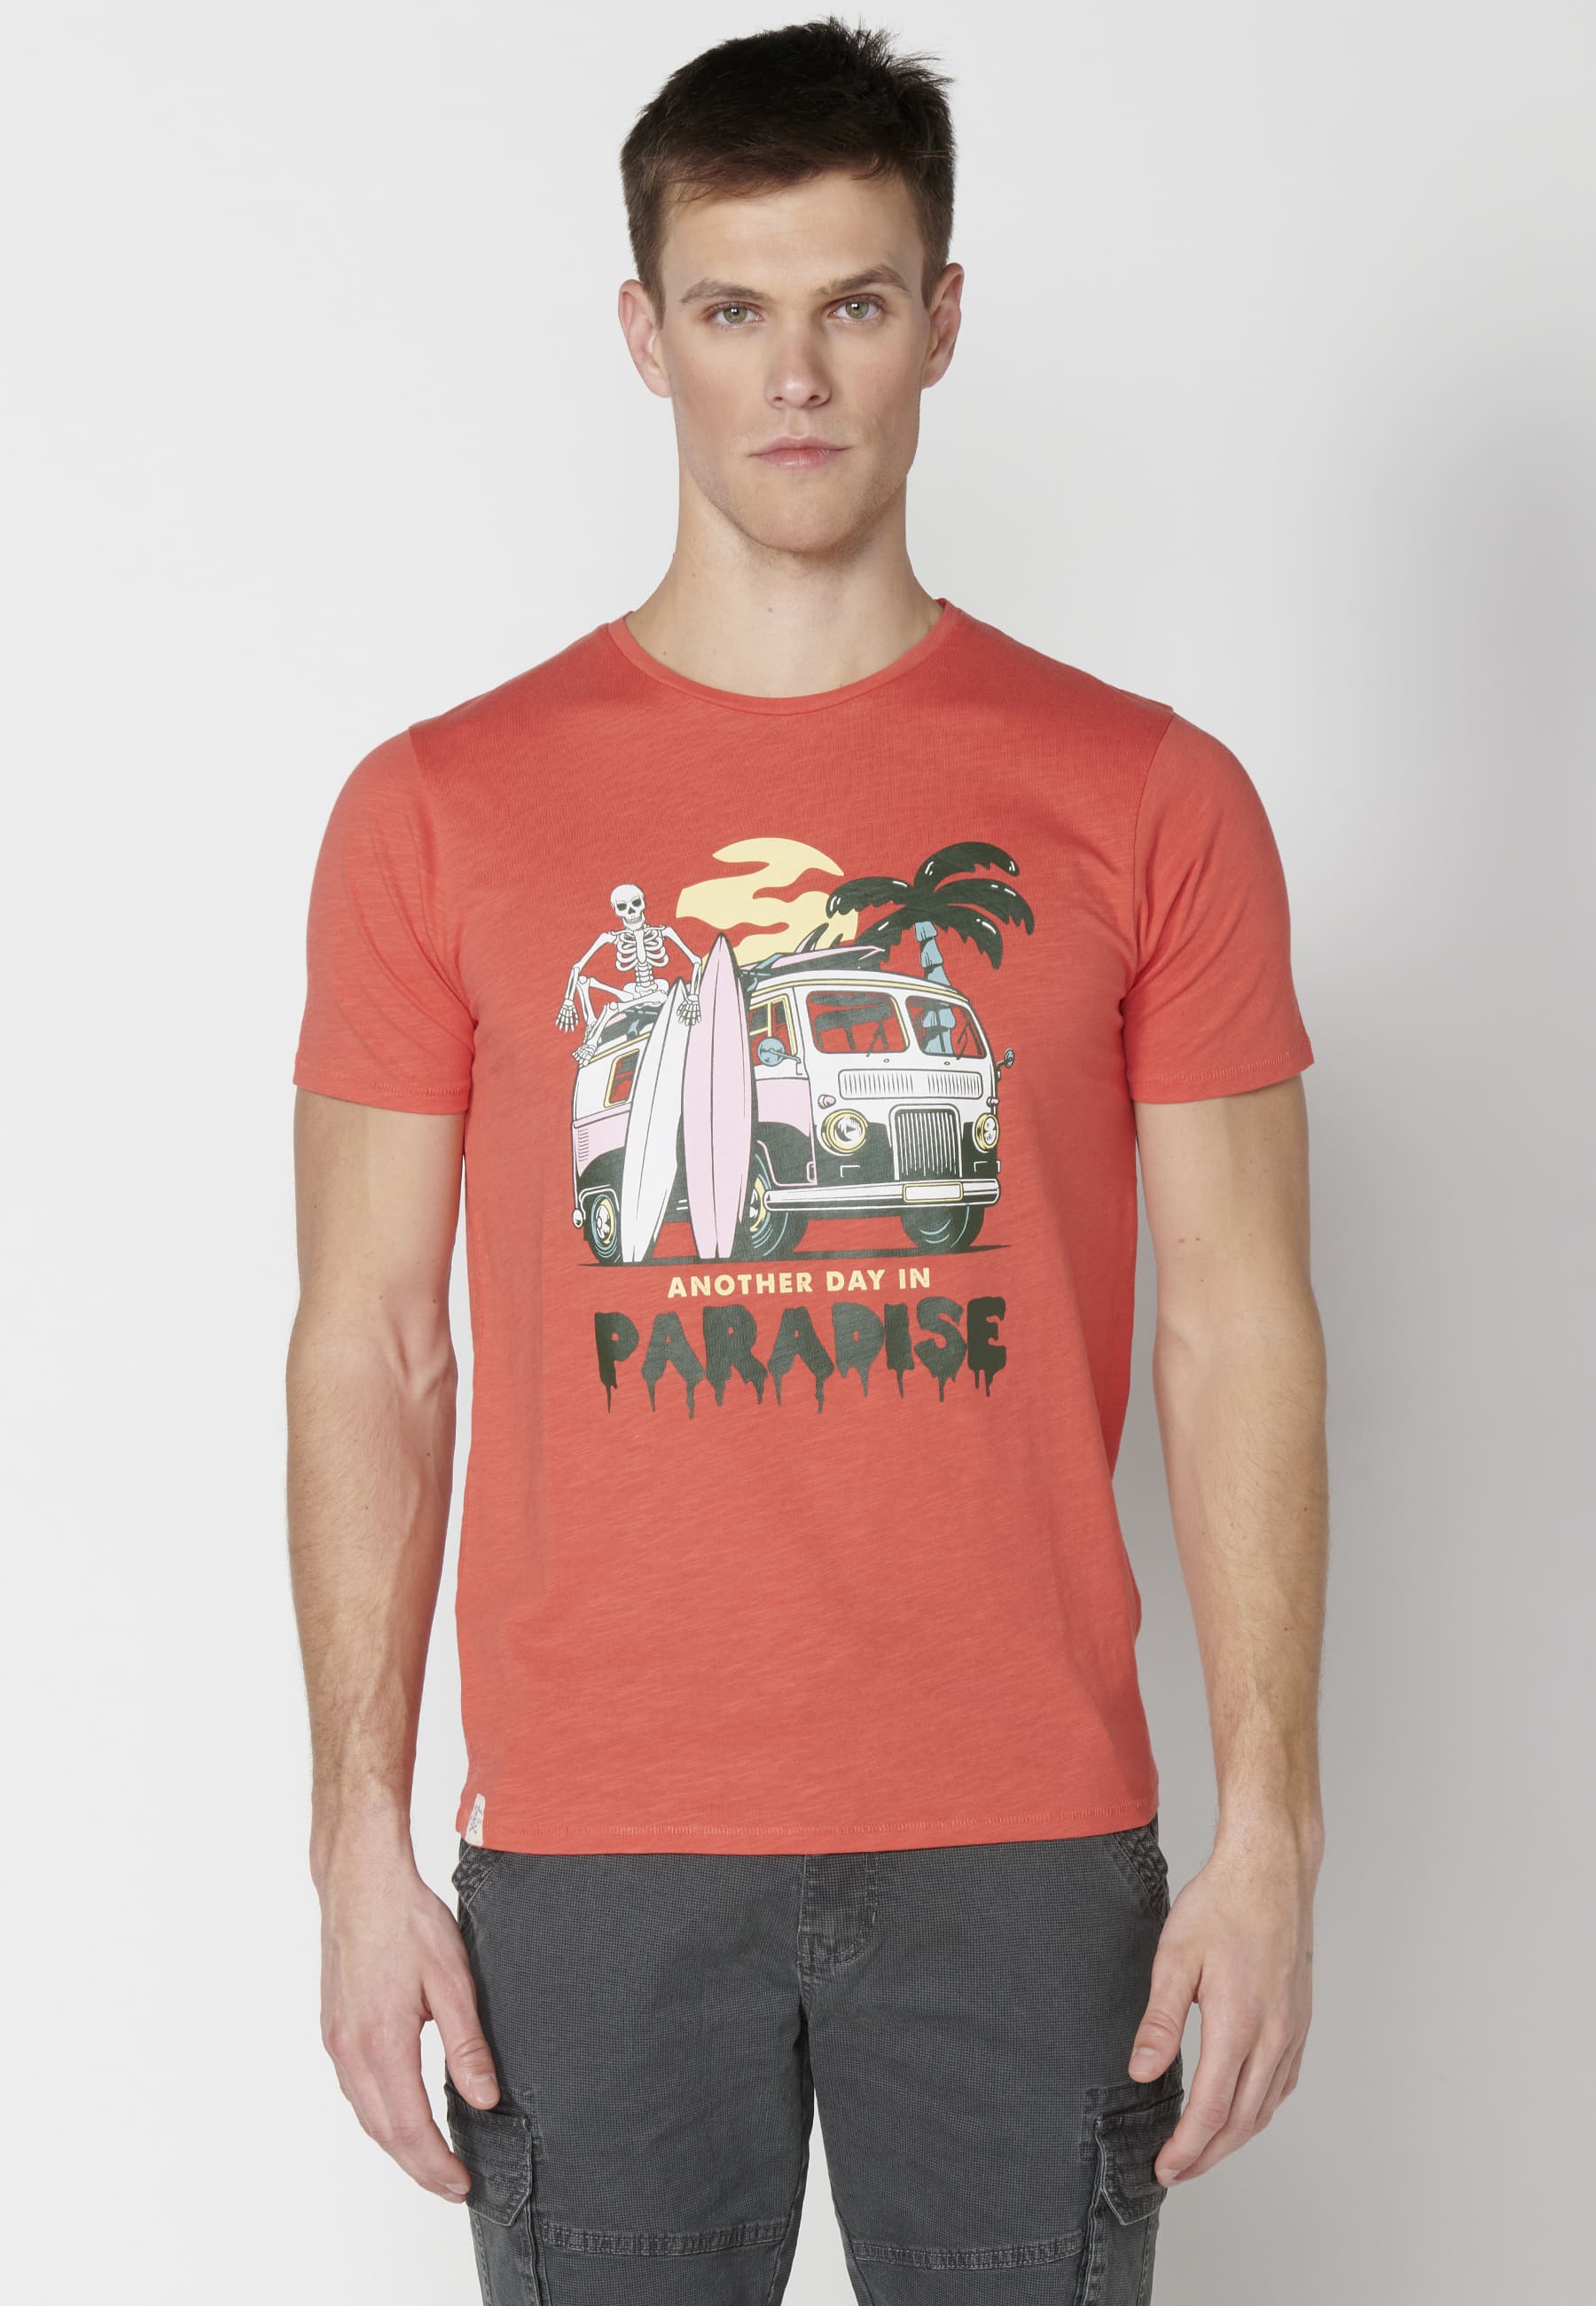 Camiseta de manga corta de Algodón color Coral para Hombre